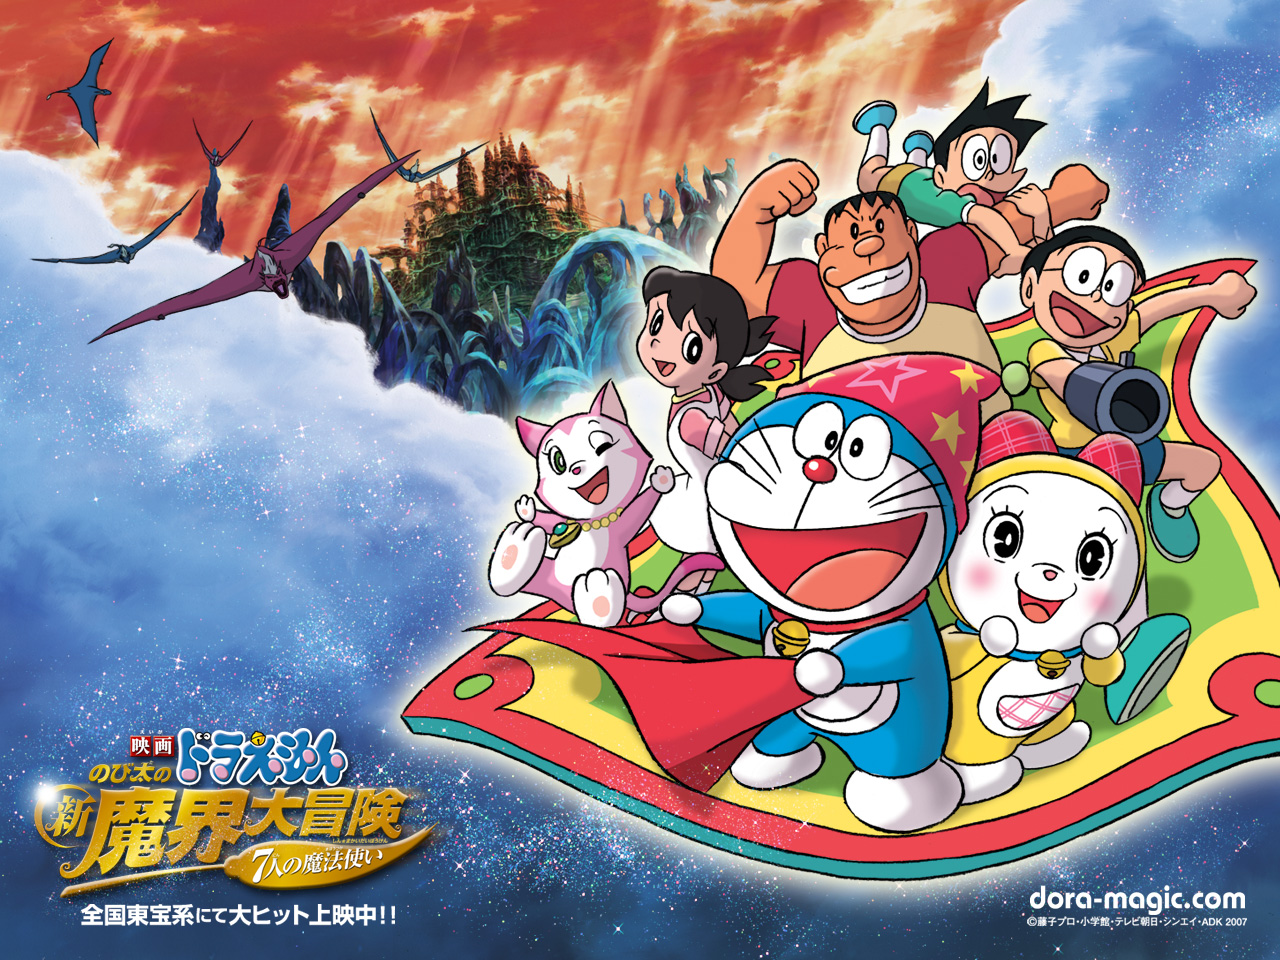 Mobile wallpaper: Anime, Doraemon, 1486617 download the picture for free.